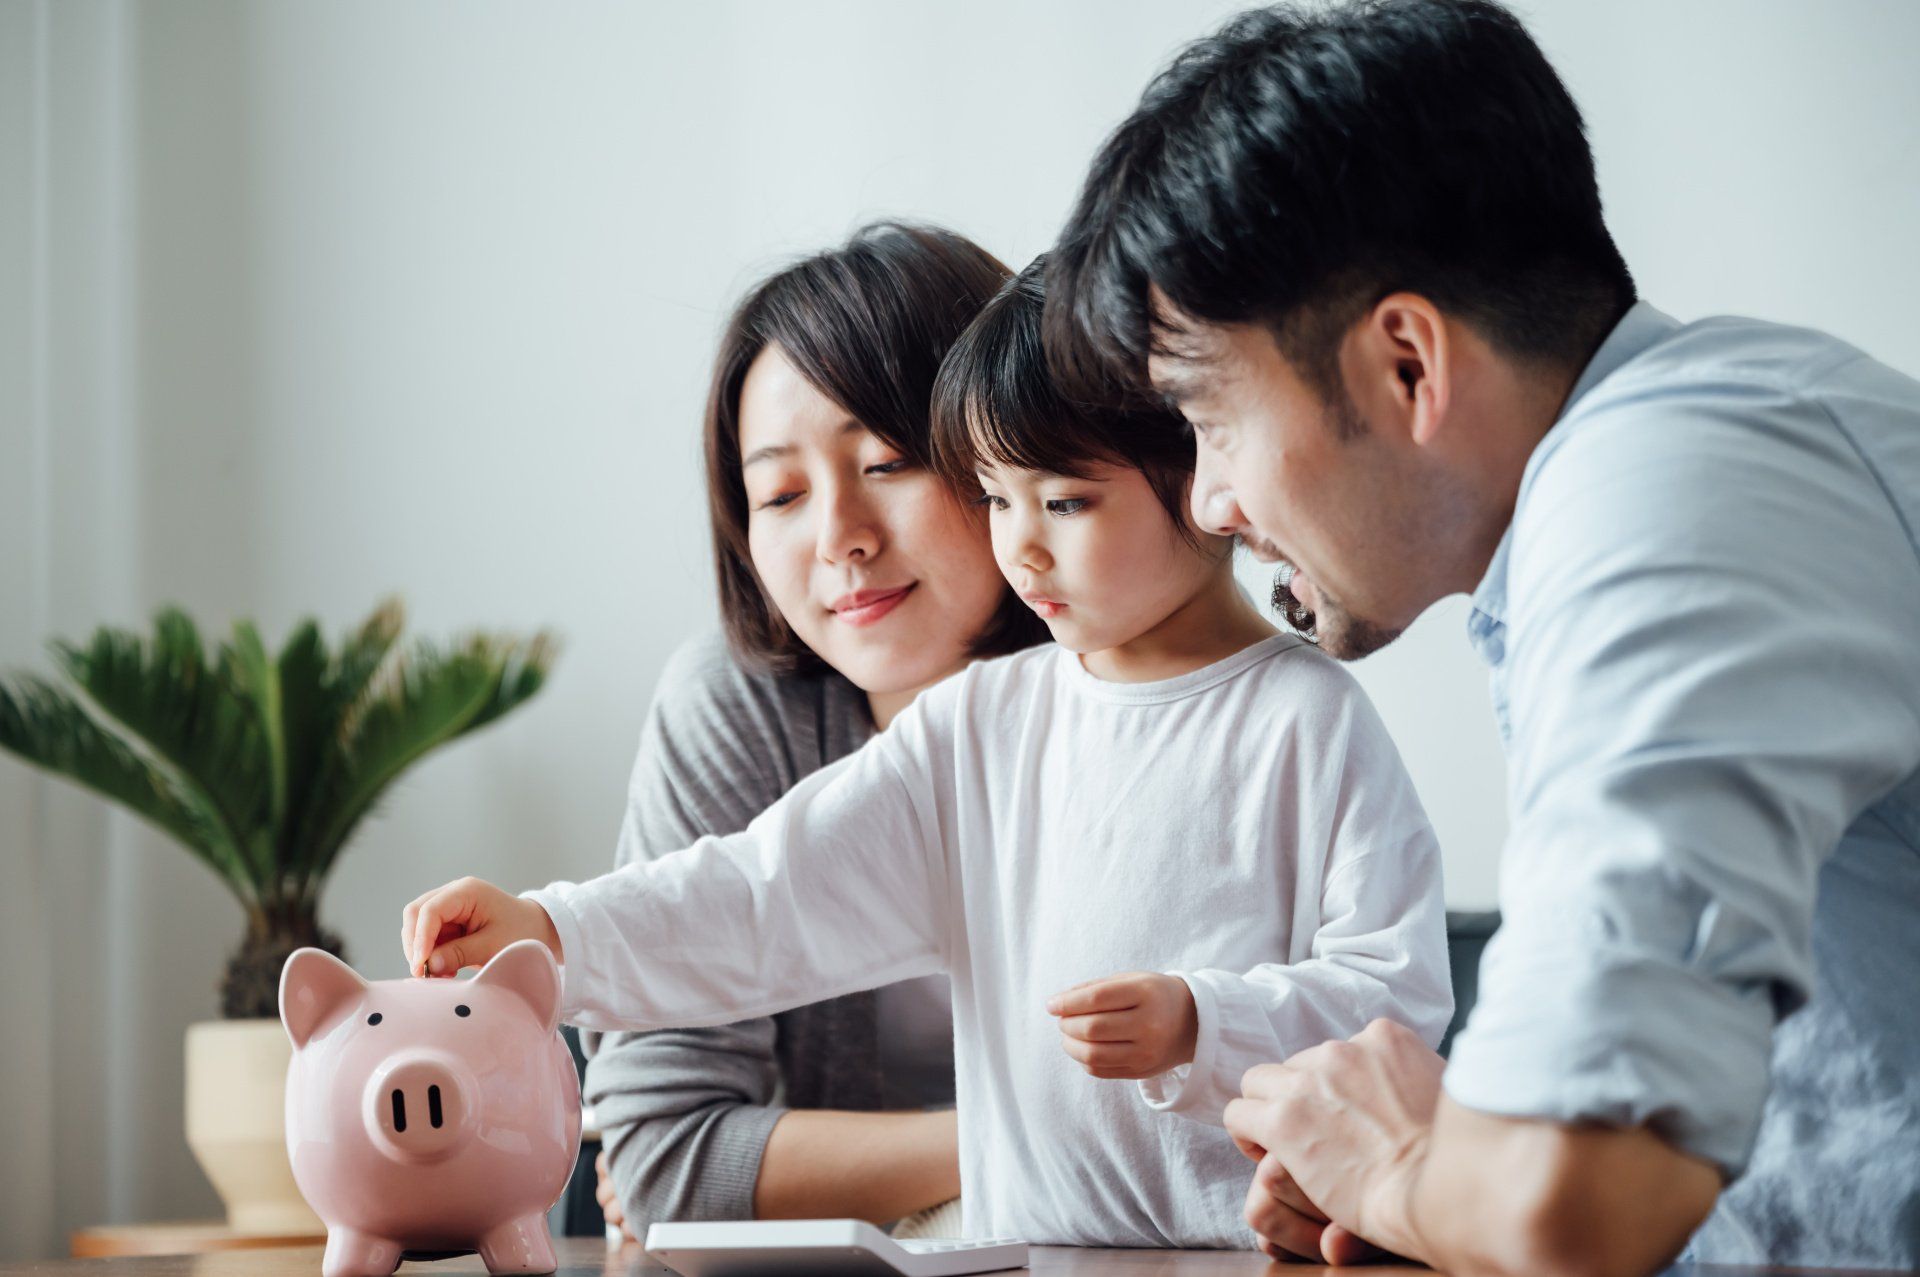 Family watching kid put money into piggy bank